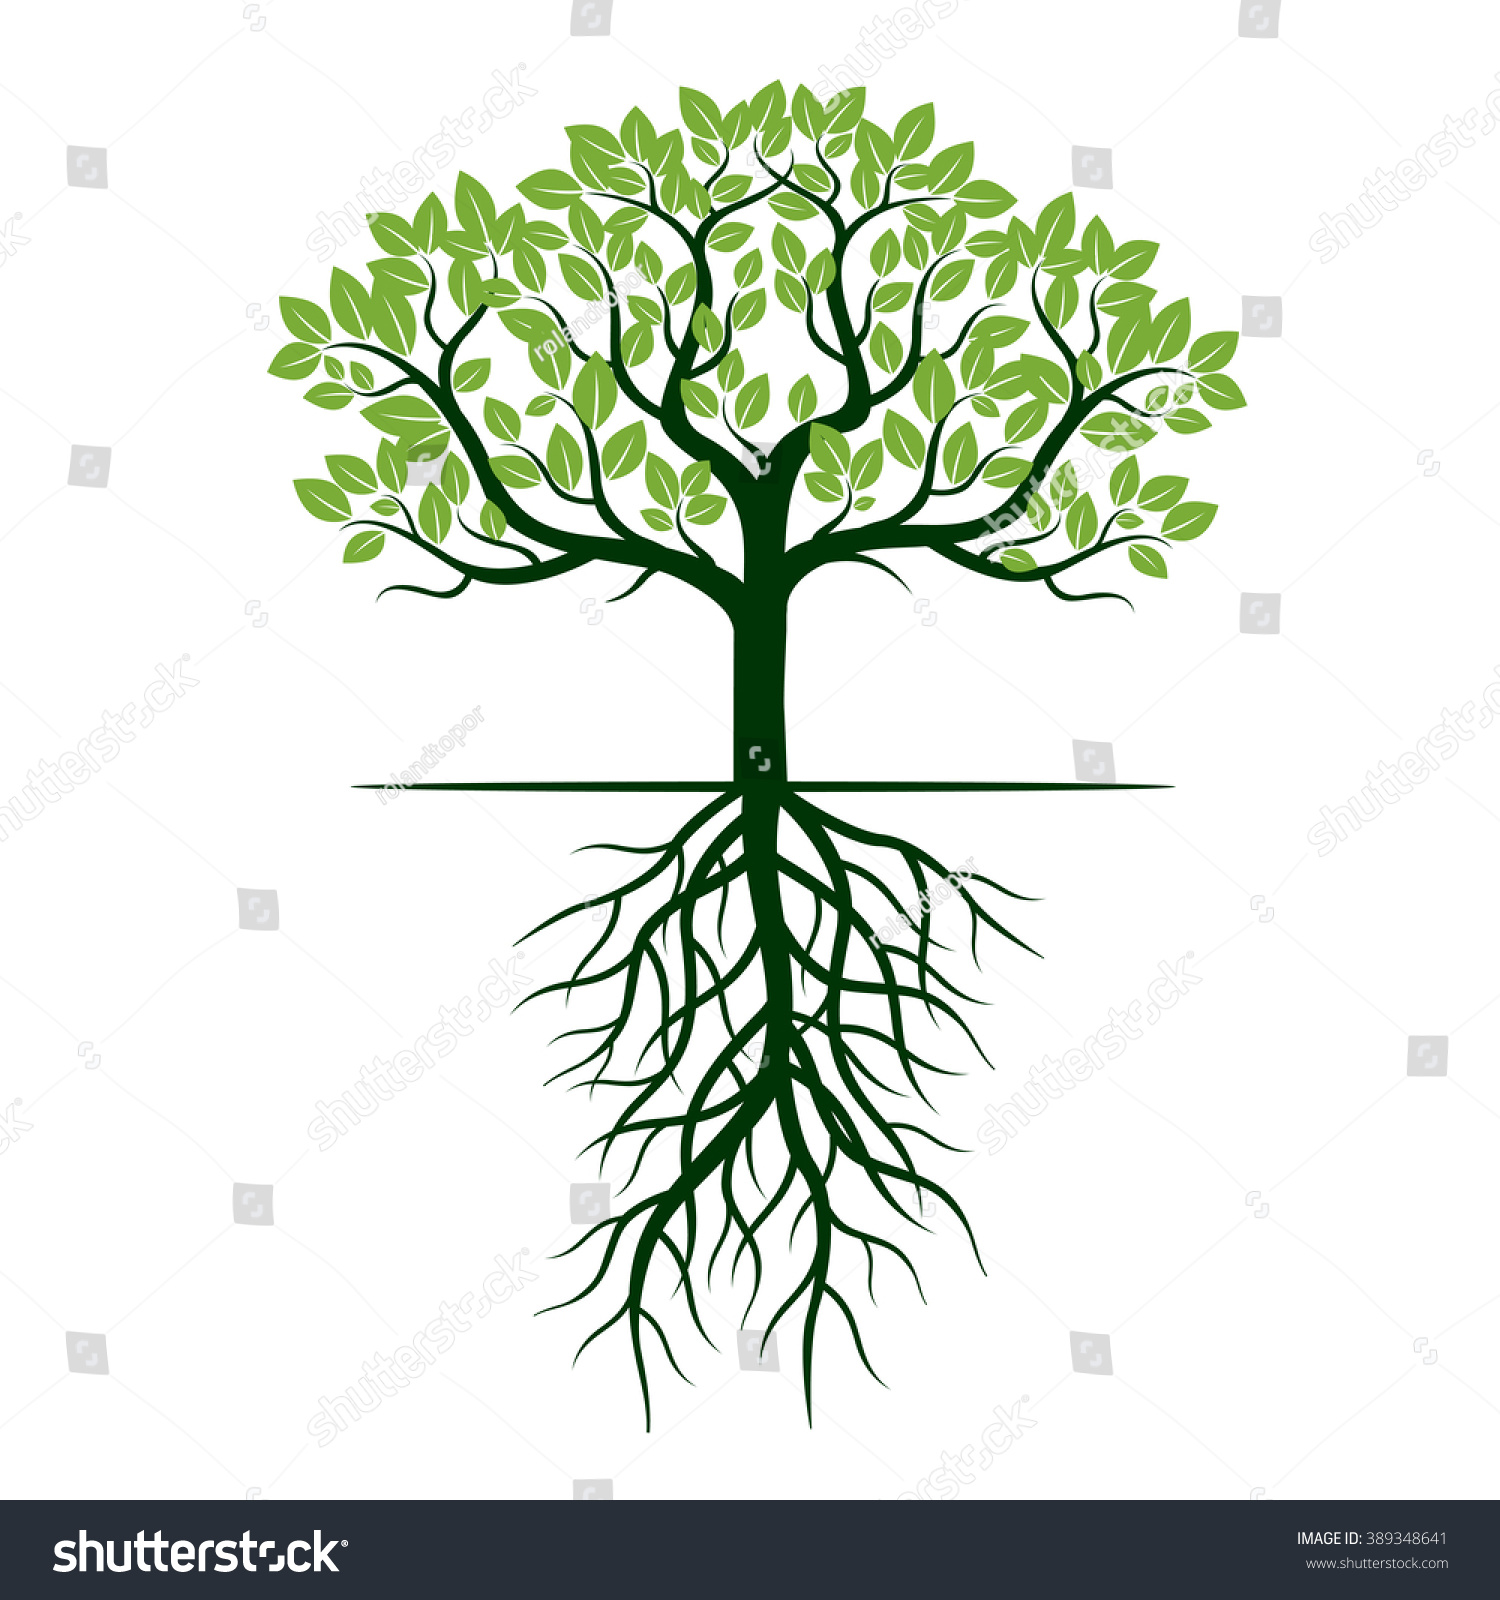 Дерево с листьями и корнями